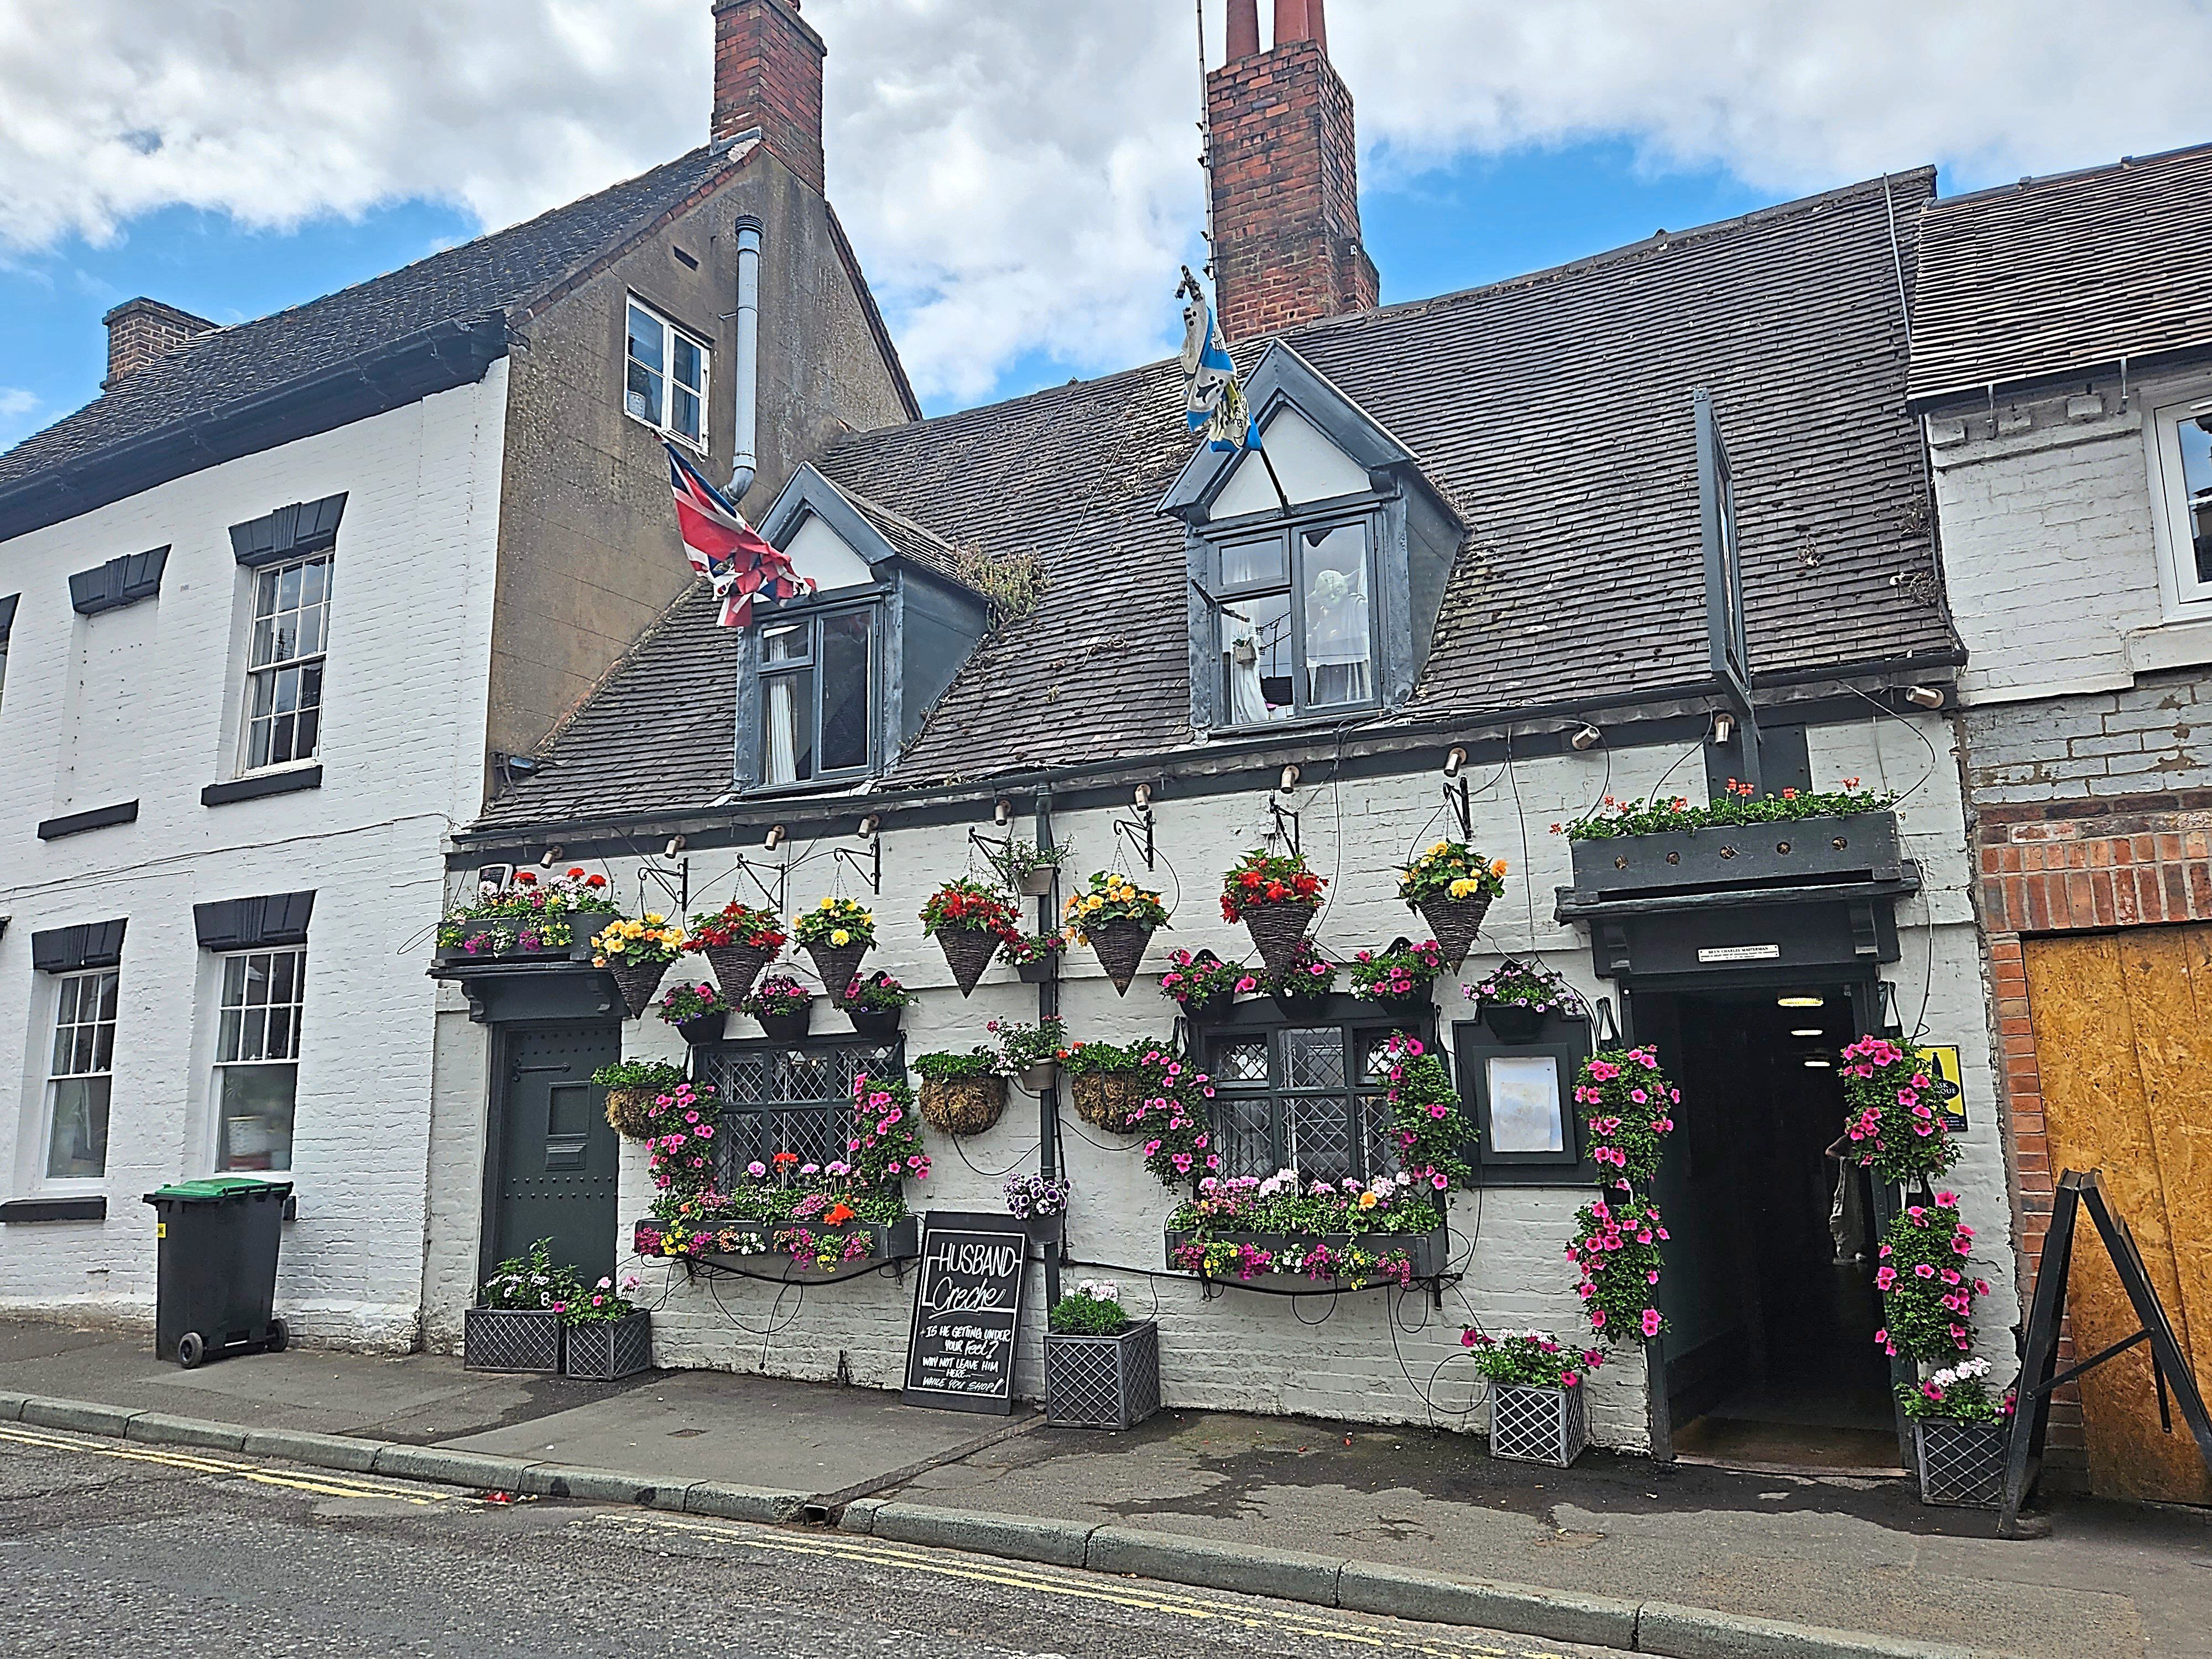 I visited the pretty Bridgnorth pub winning fans on Tripadvisor - here's my verdict